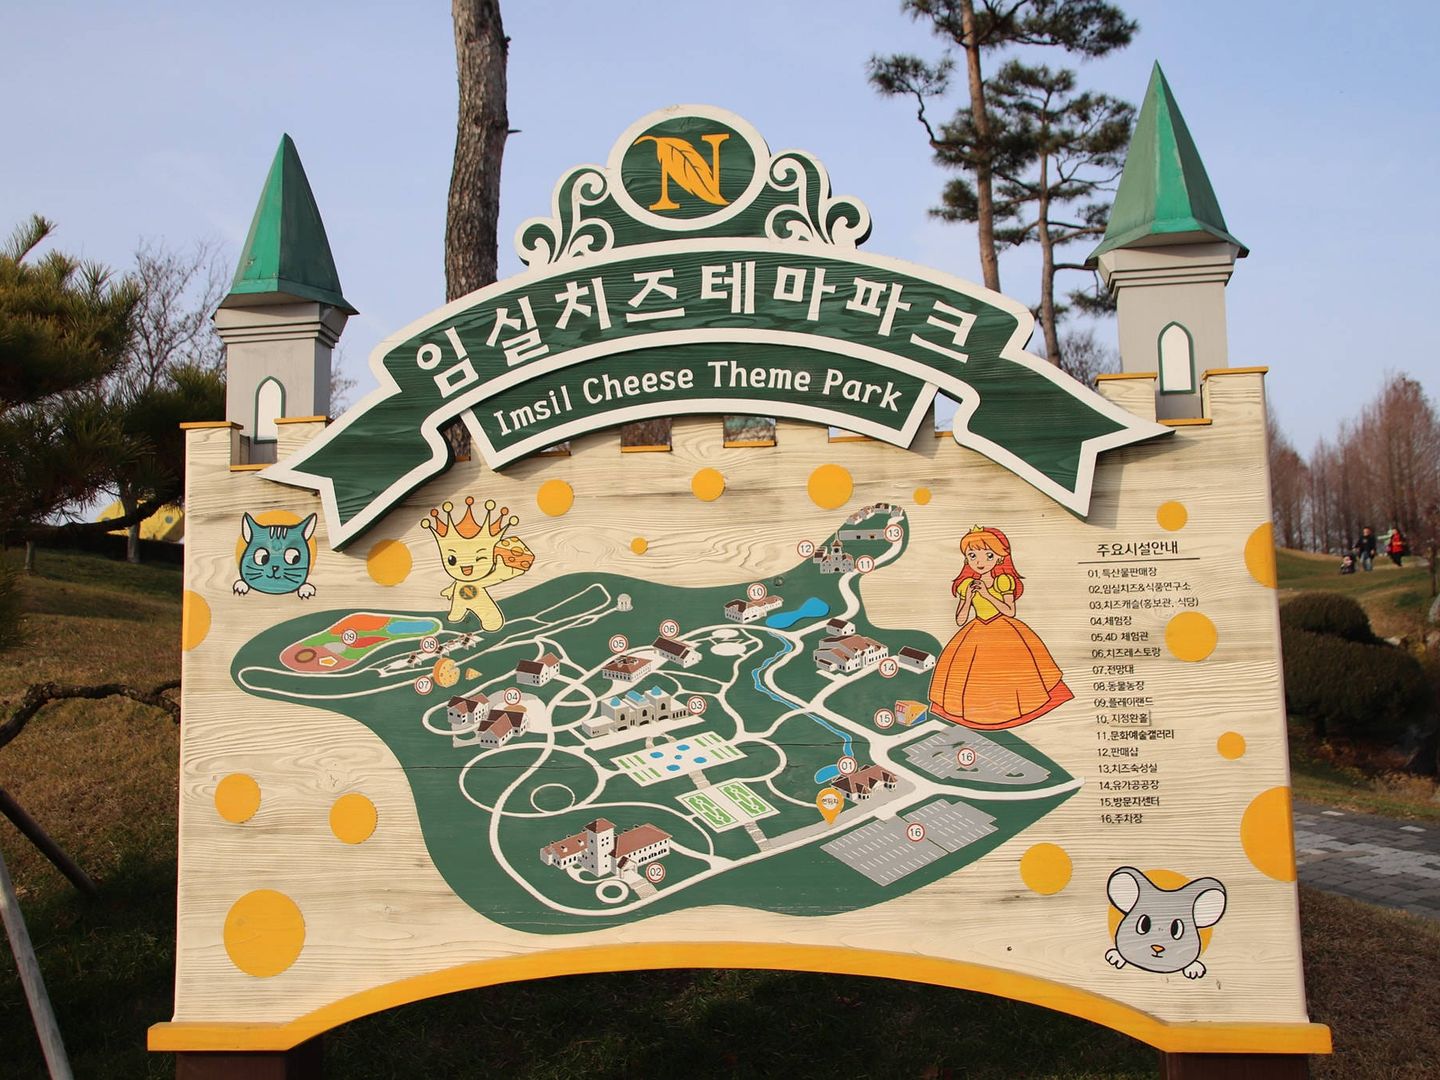 Al mapa del parque no le falta el ratón (Foto: Ismil Cheese Park)